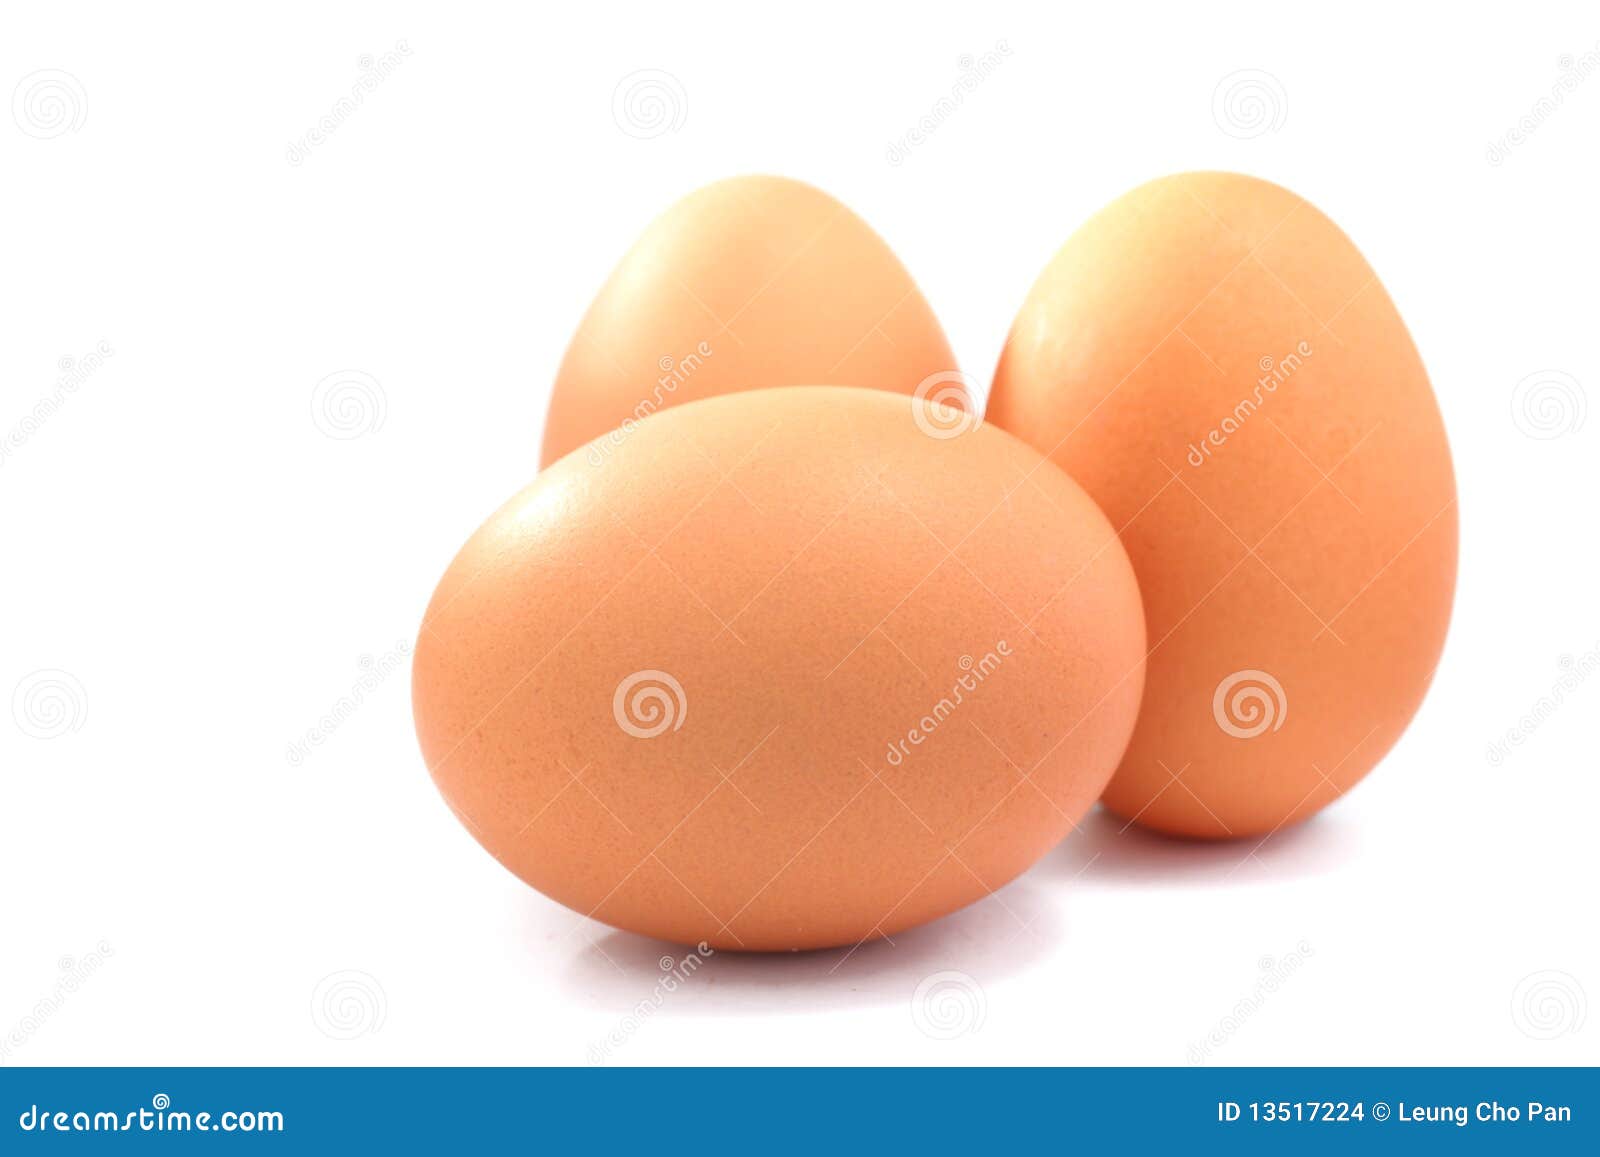 Включи 3 яйца. 3 Яйца. Три яйца картинка. Яйца 3 штуки.